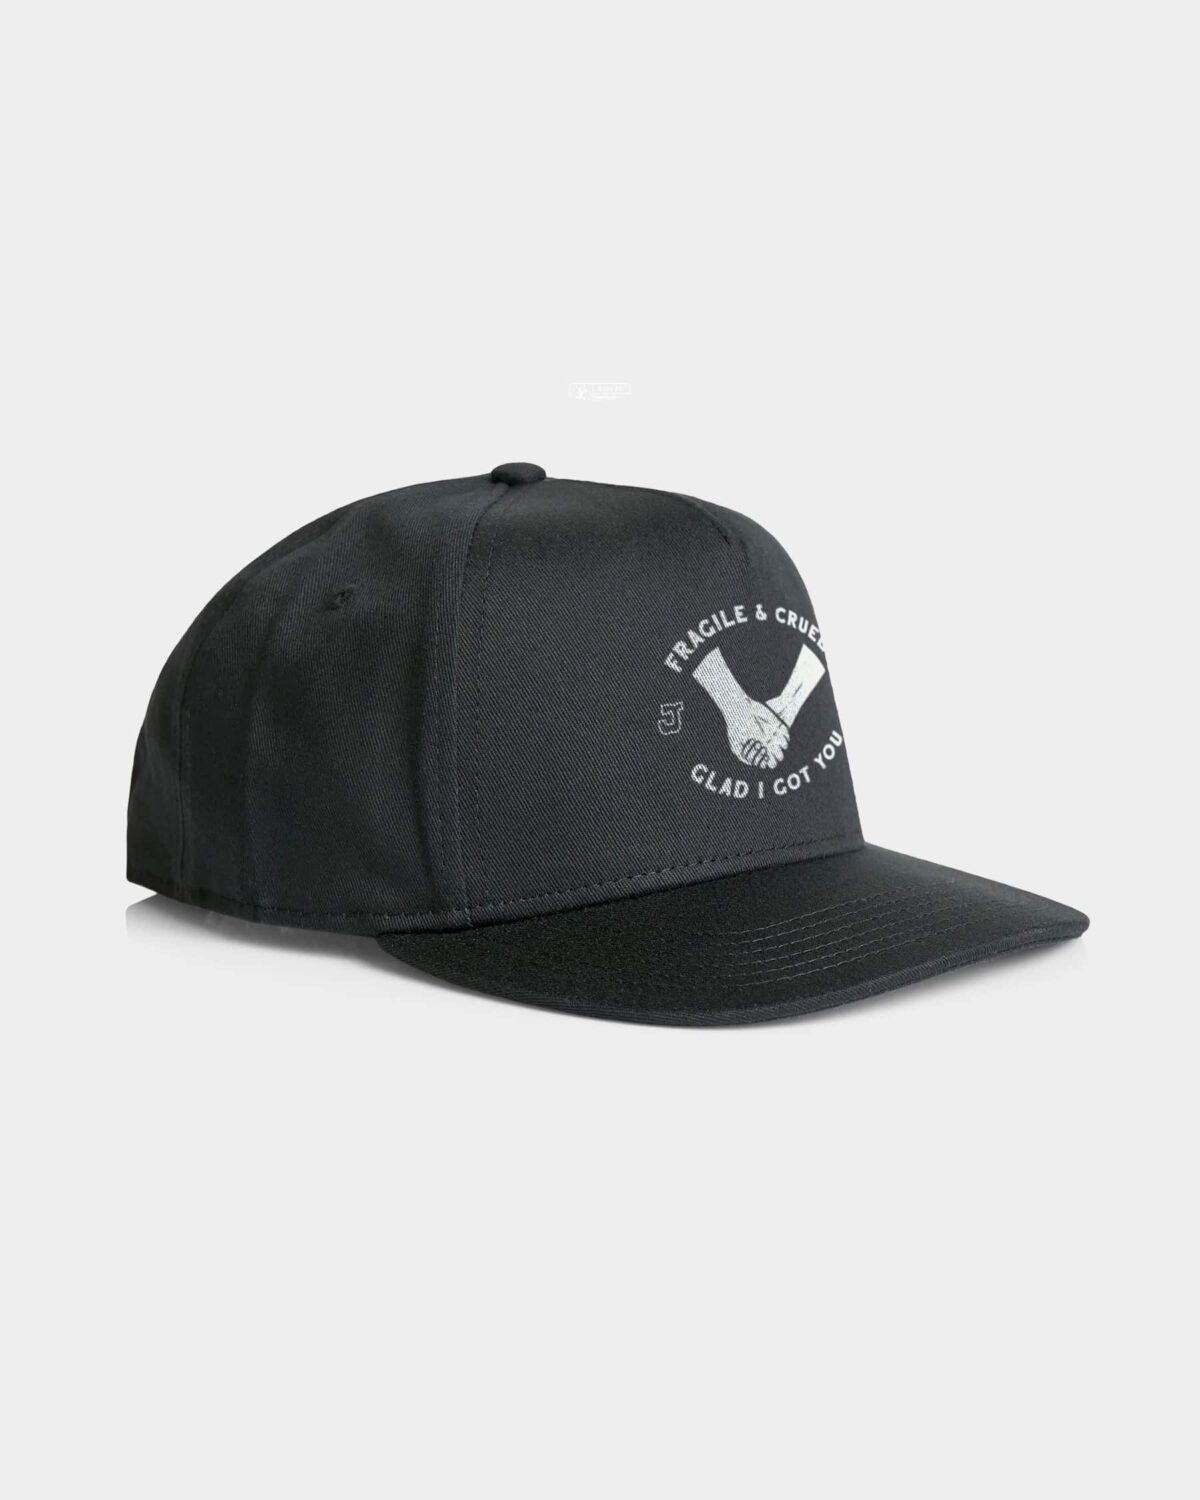 FragileCruel Hat Black ASC